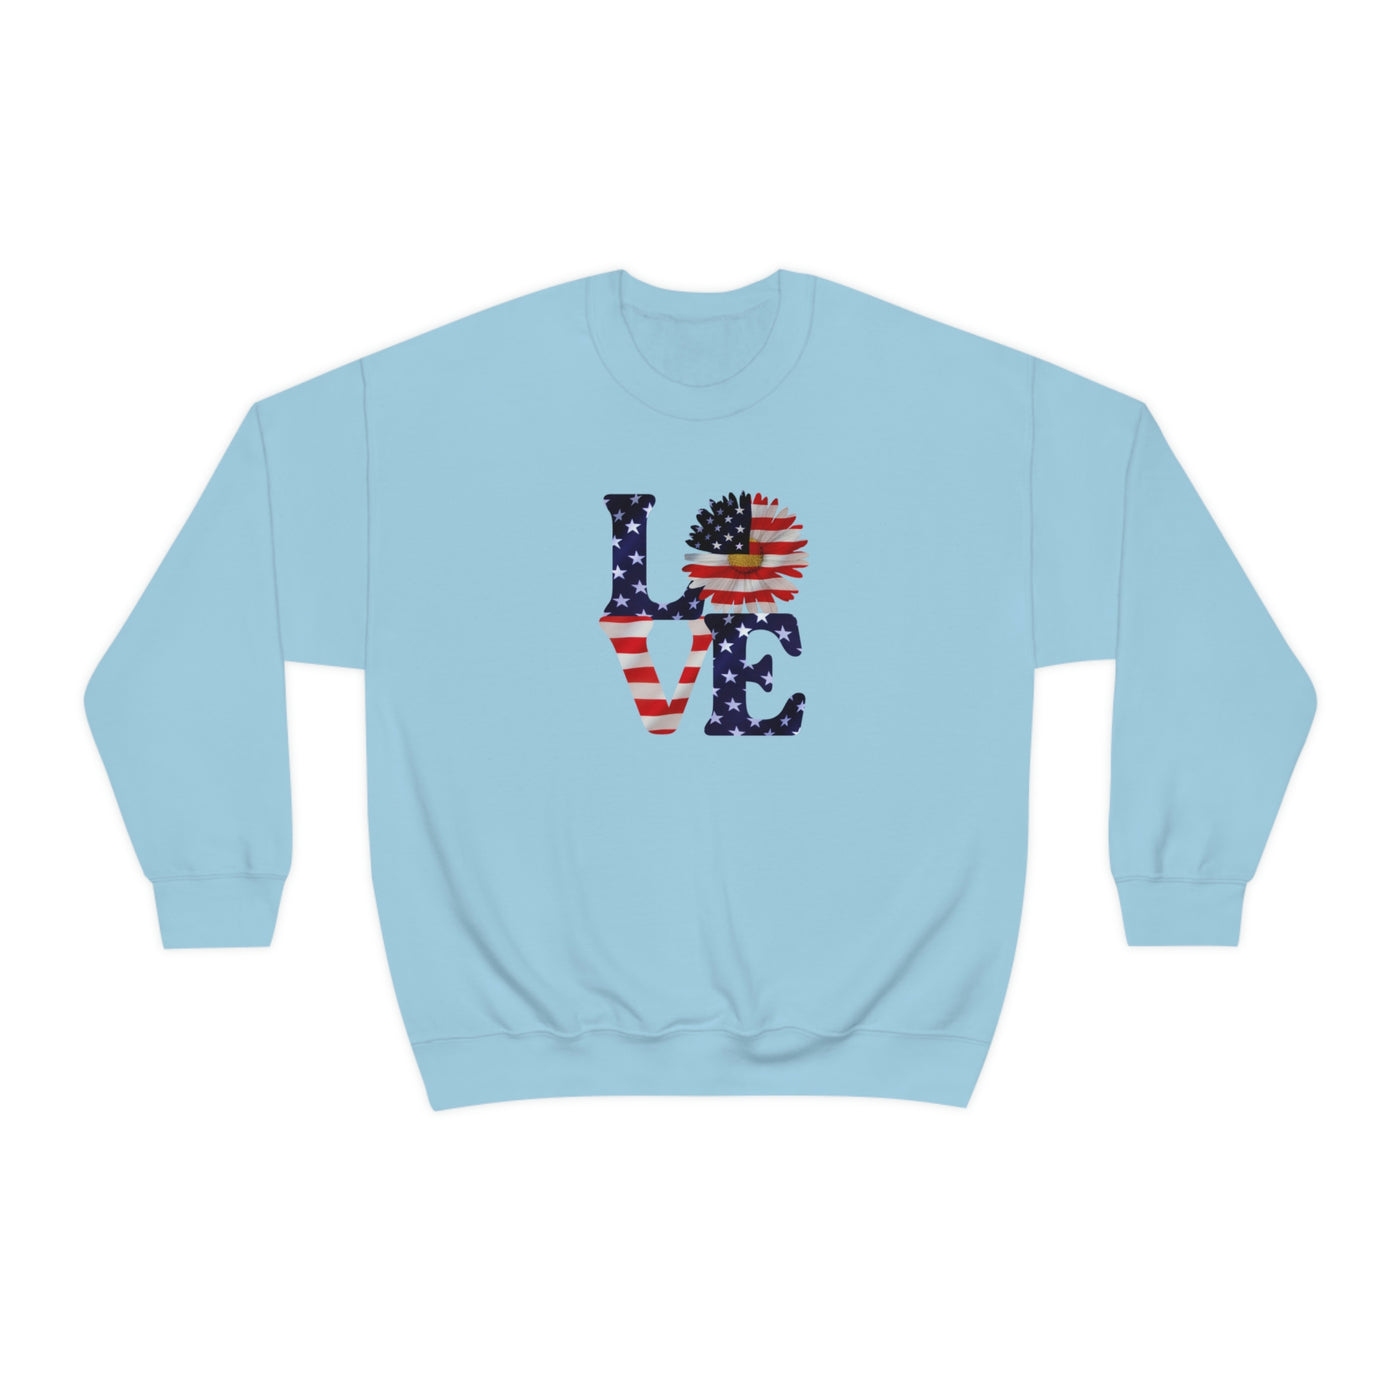 Love Freedom Crewneck Sweatshirt